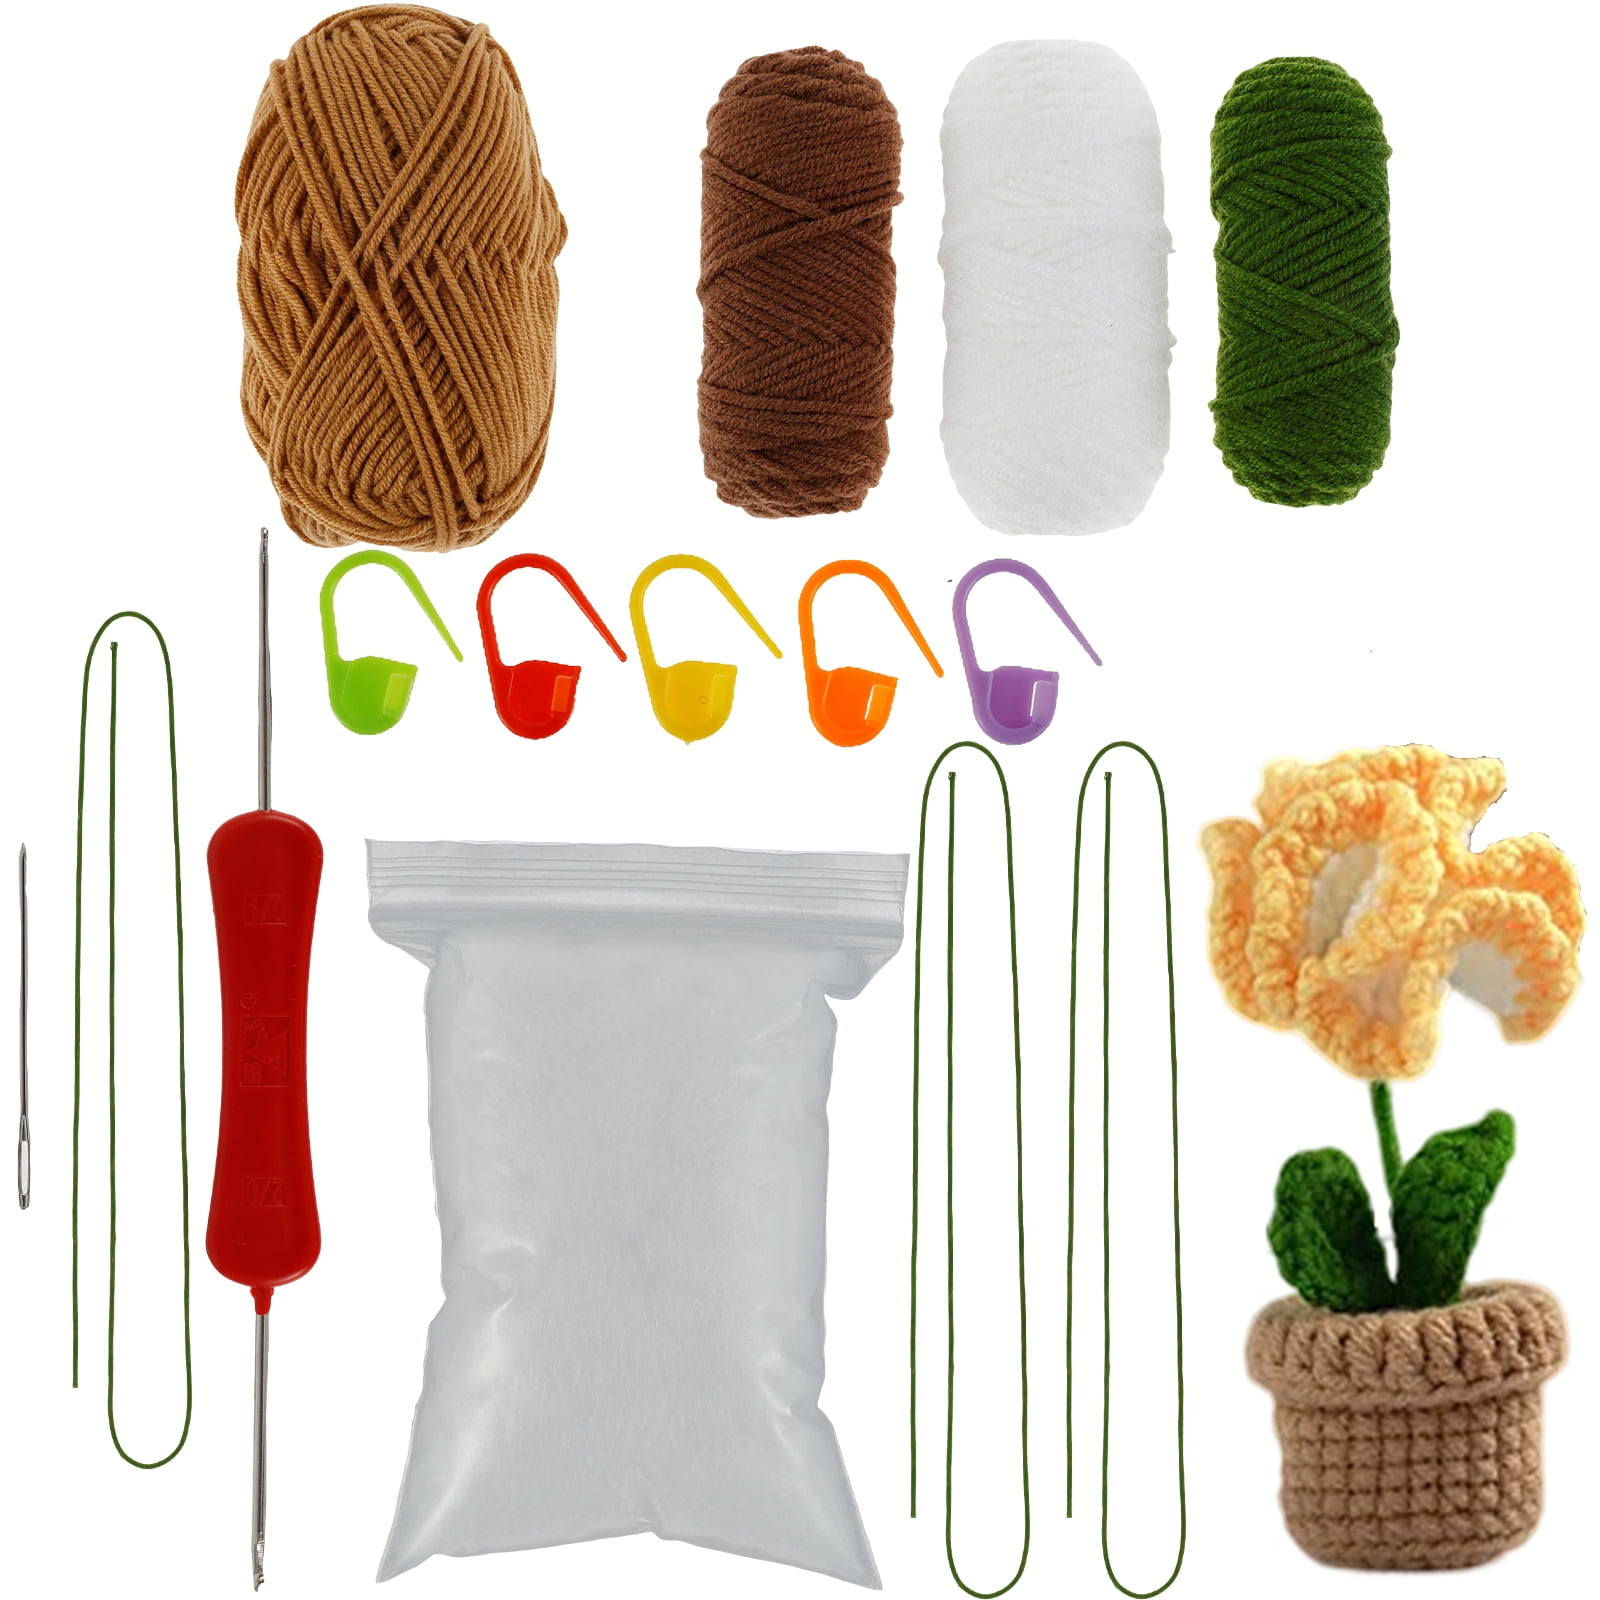  Qunland Crochet Kit for Beginners, 6 Pcs Potted